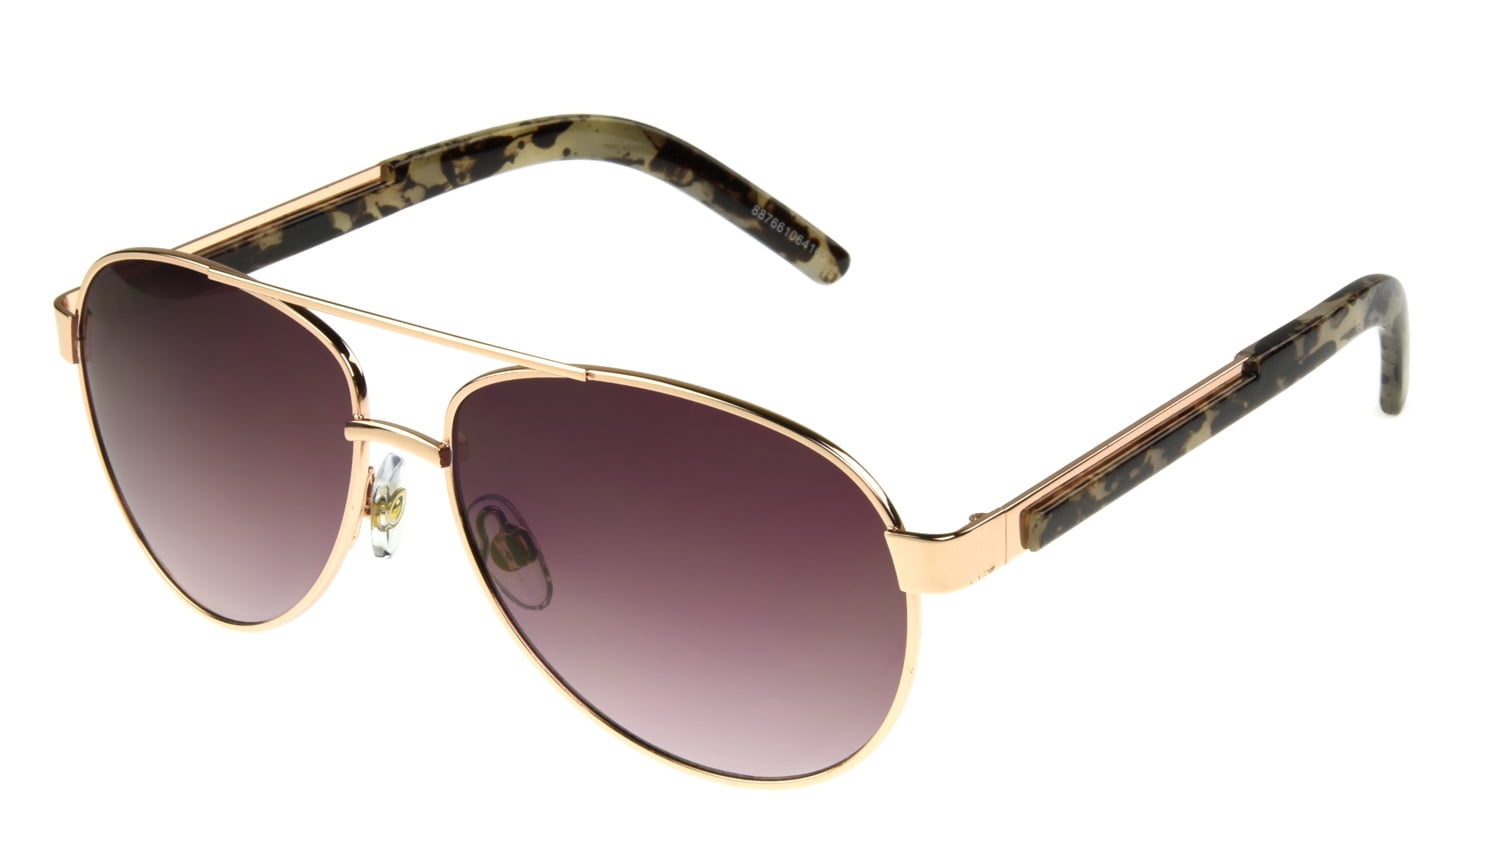 Foster Grant - Foster Grant Women's Gold Aviator Sunglasses I05 ...